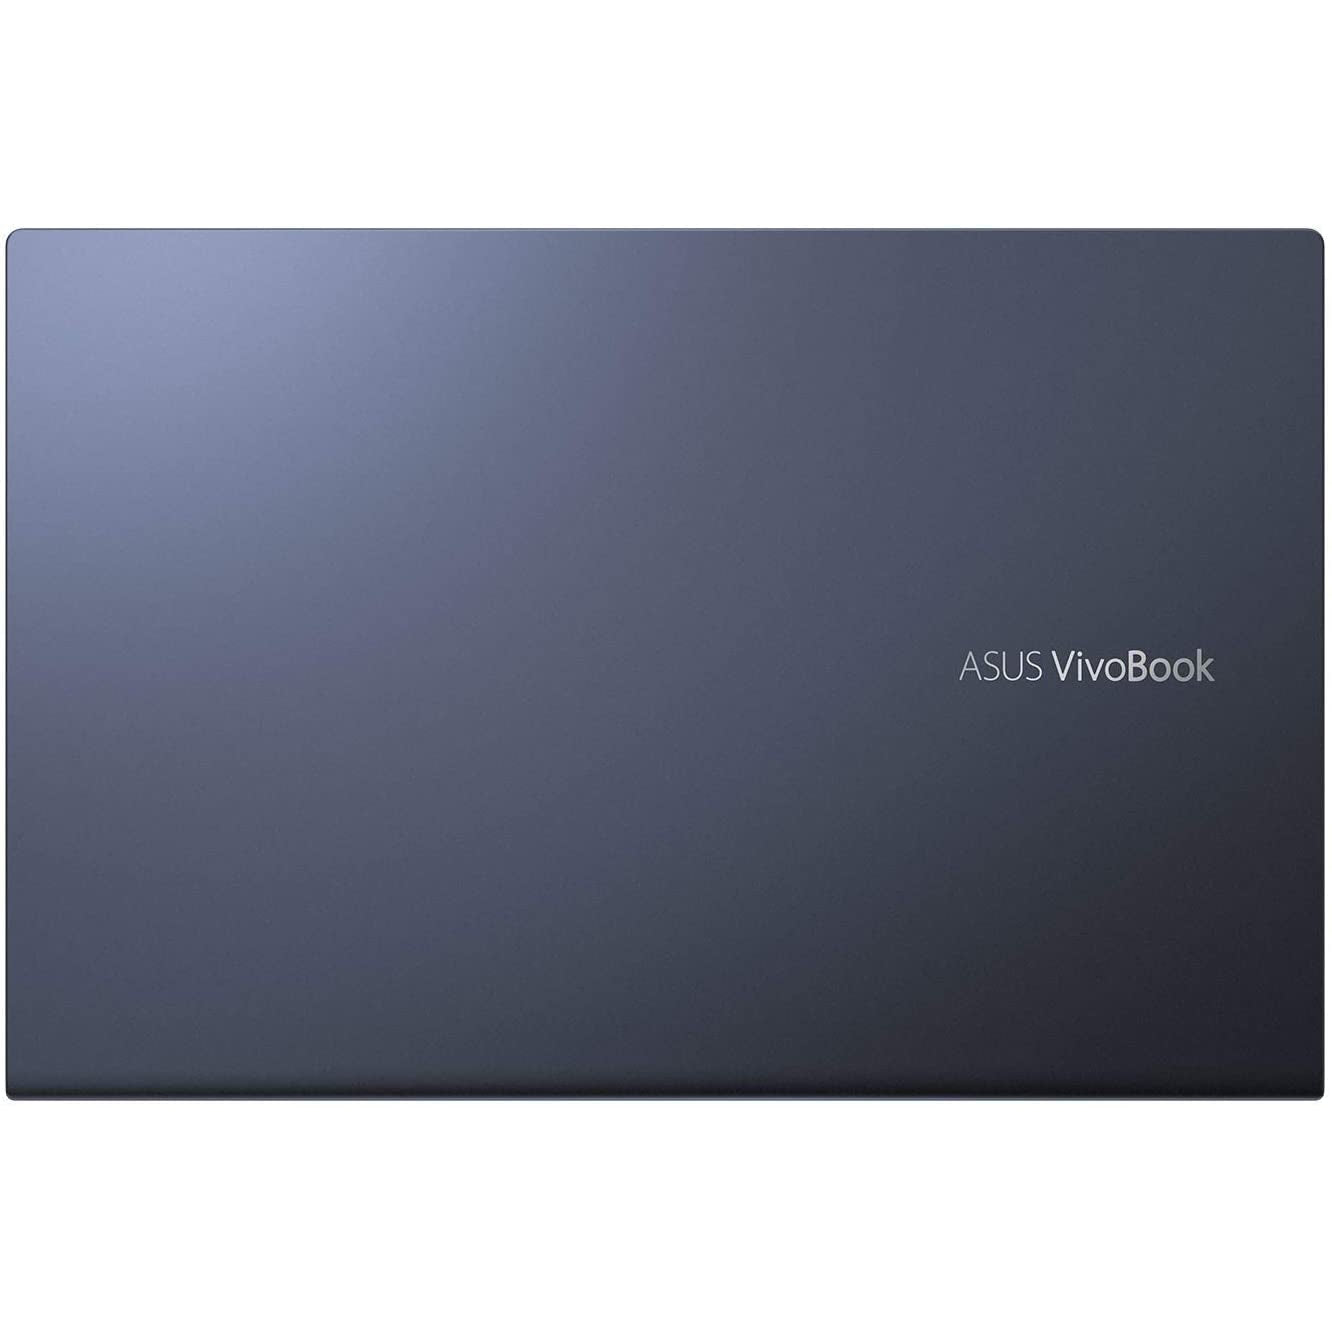 ASUS VivoBook 14 X413FA-EK096T Laptop, Intel Core i3 Processor, 8GB RAM, 128GB SSD, 14" Full HD, Blue